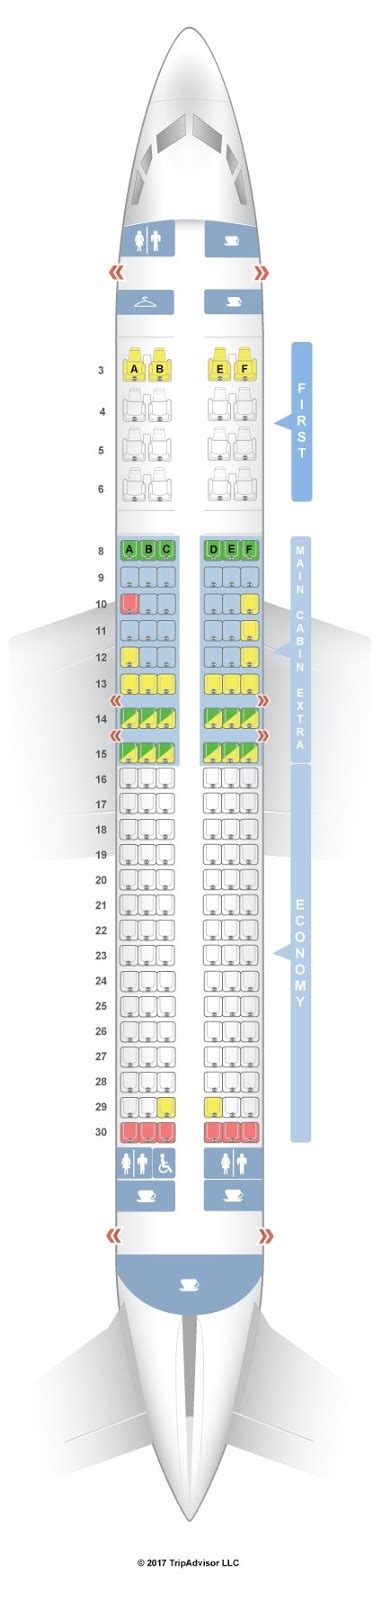 aa 737 seating chart